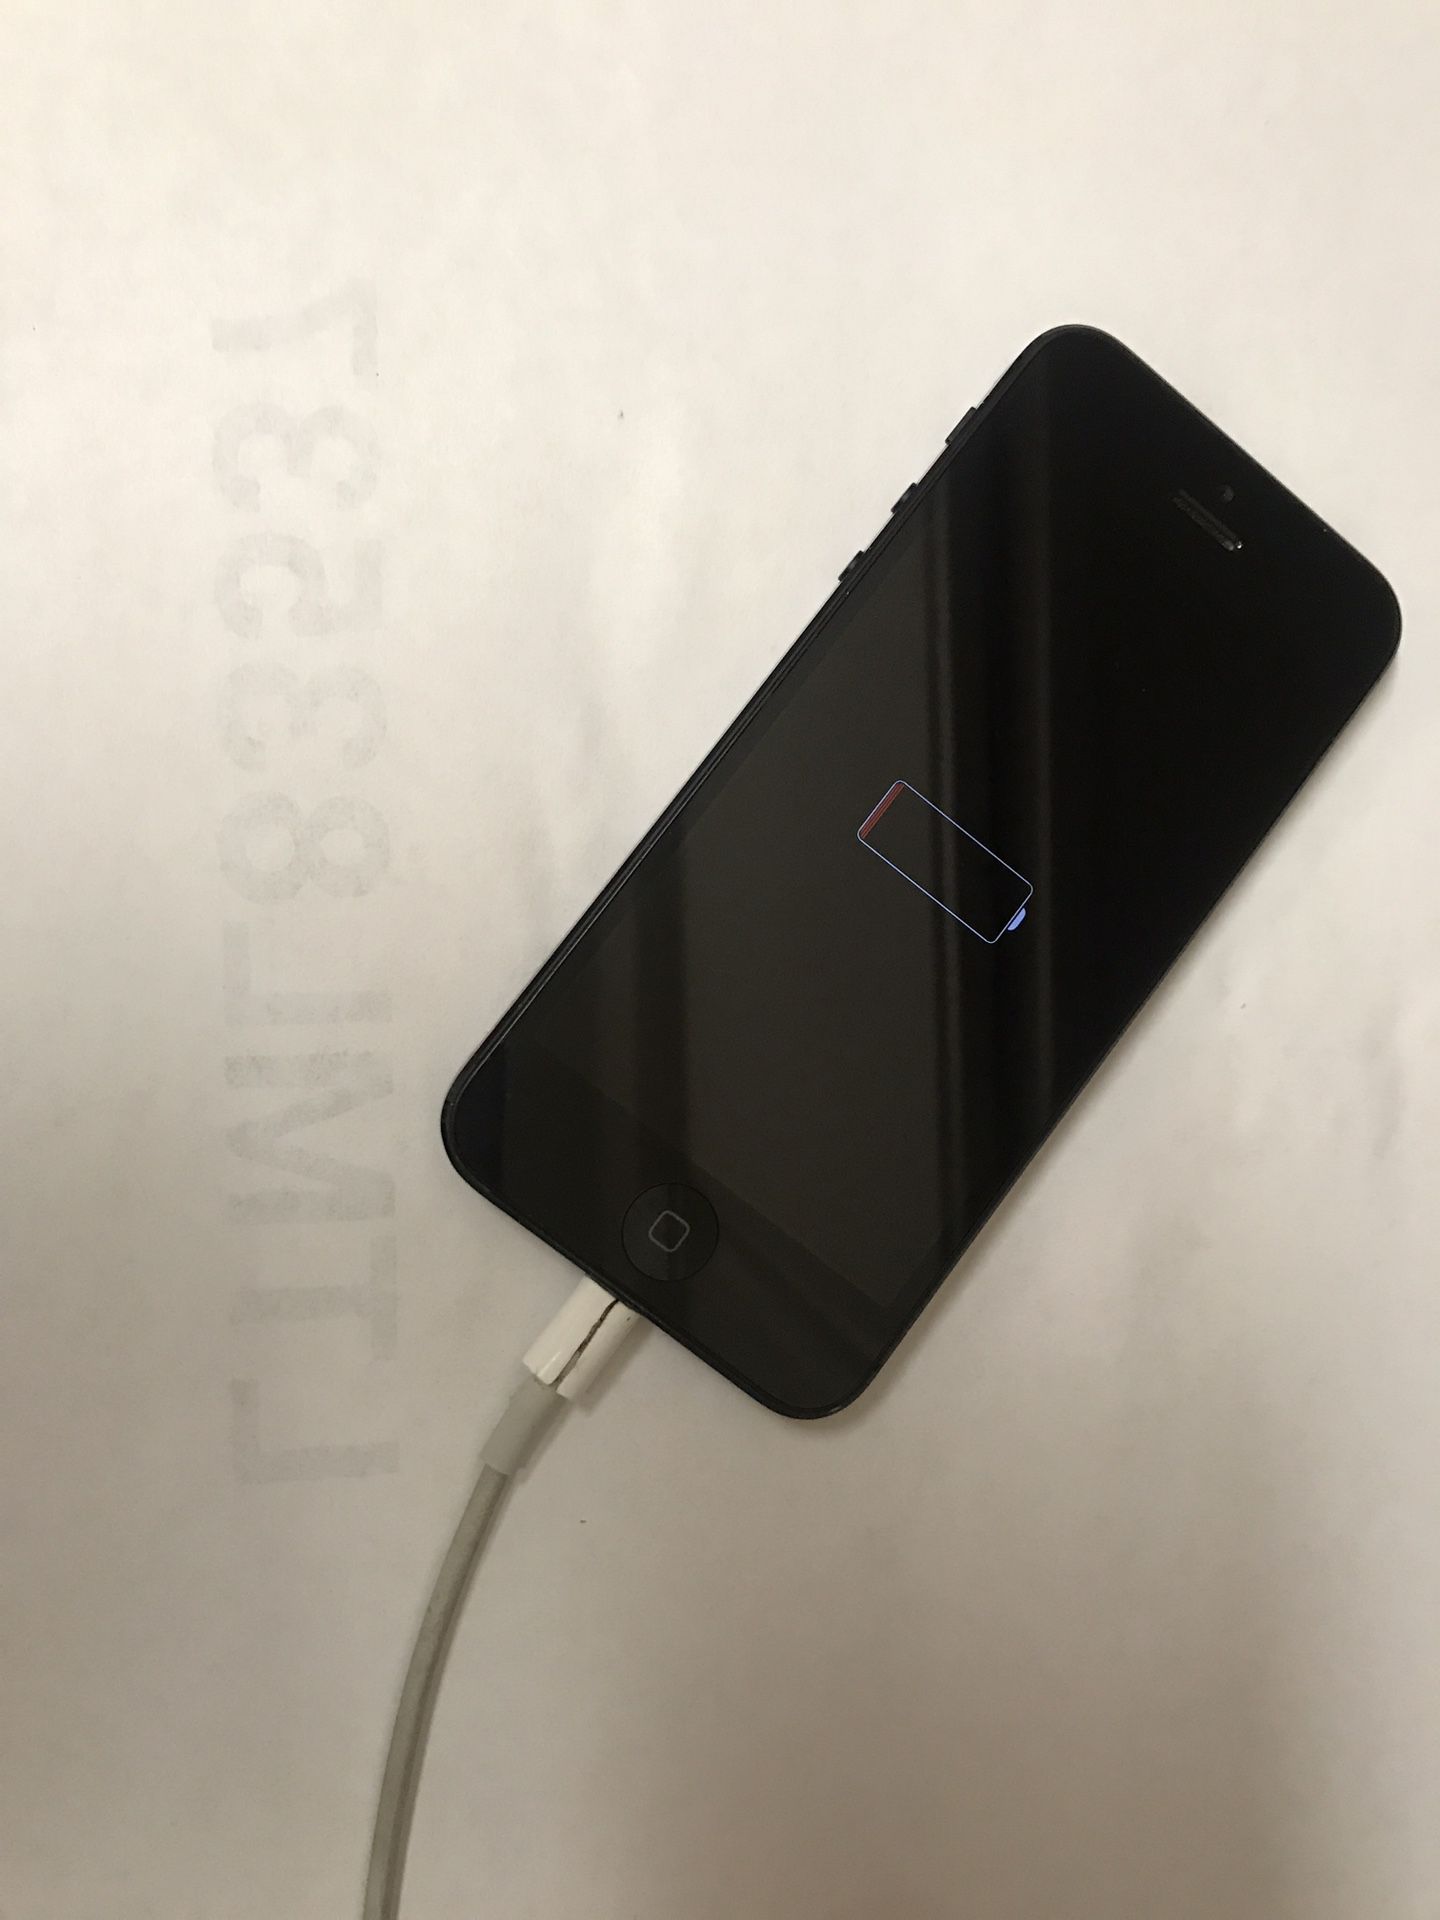 iPhone 5 - Unlocked w/ Confirmation